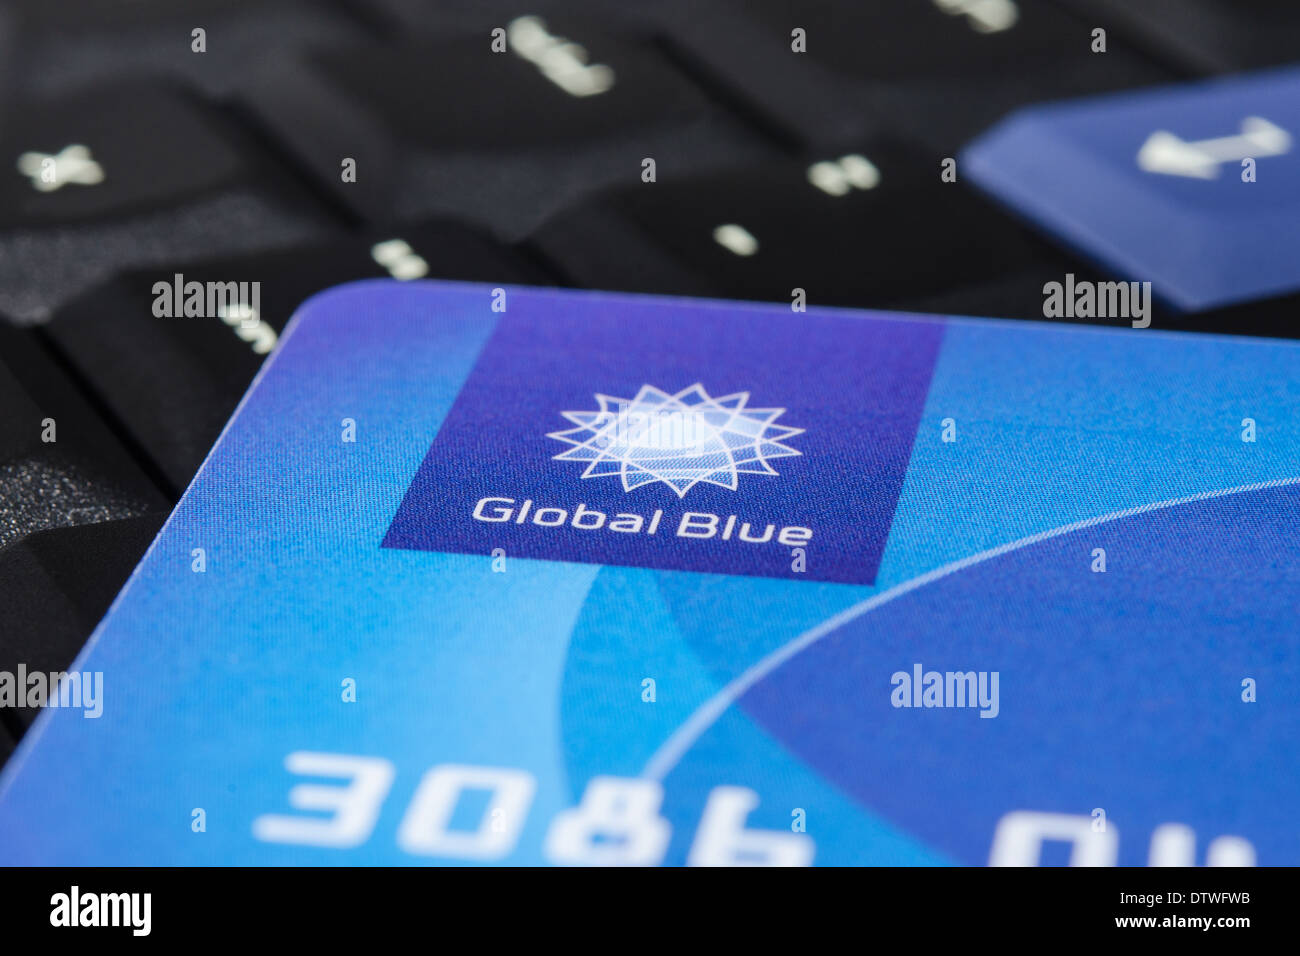 MUNICH, GERMANY - FEBRUAR 20, 2014: Plastic 'Global Blue' card on laptop ThinkPad keyboard. Easy for tax free shopping. Stock Photo